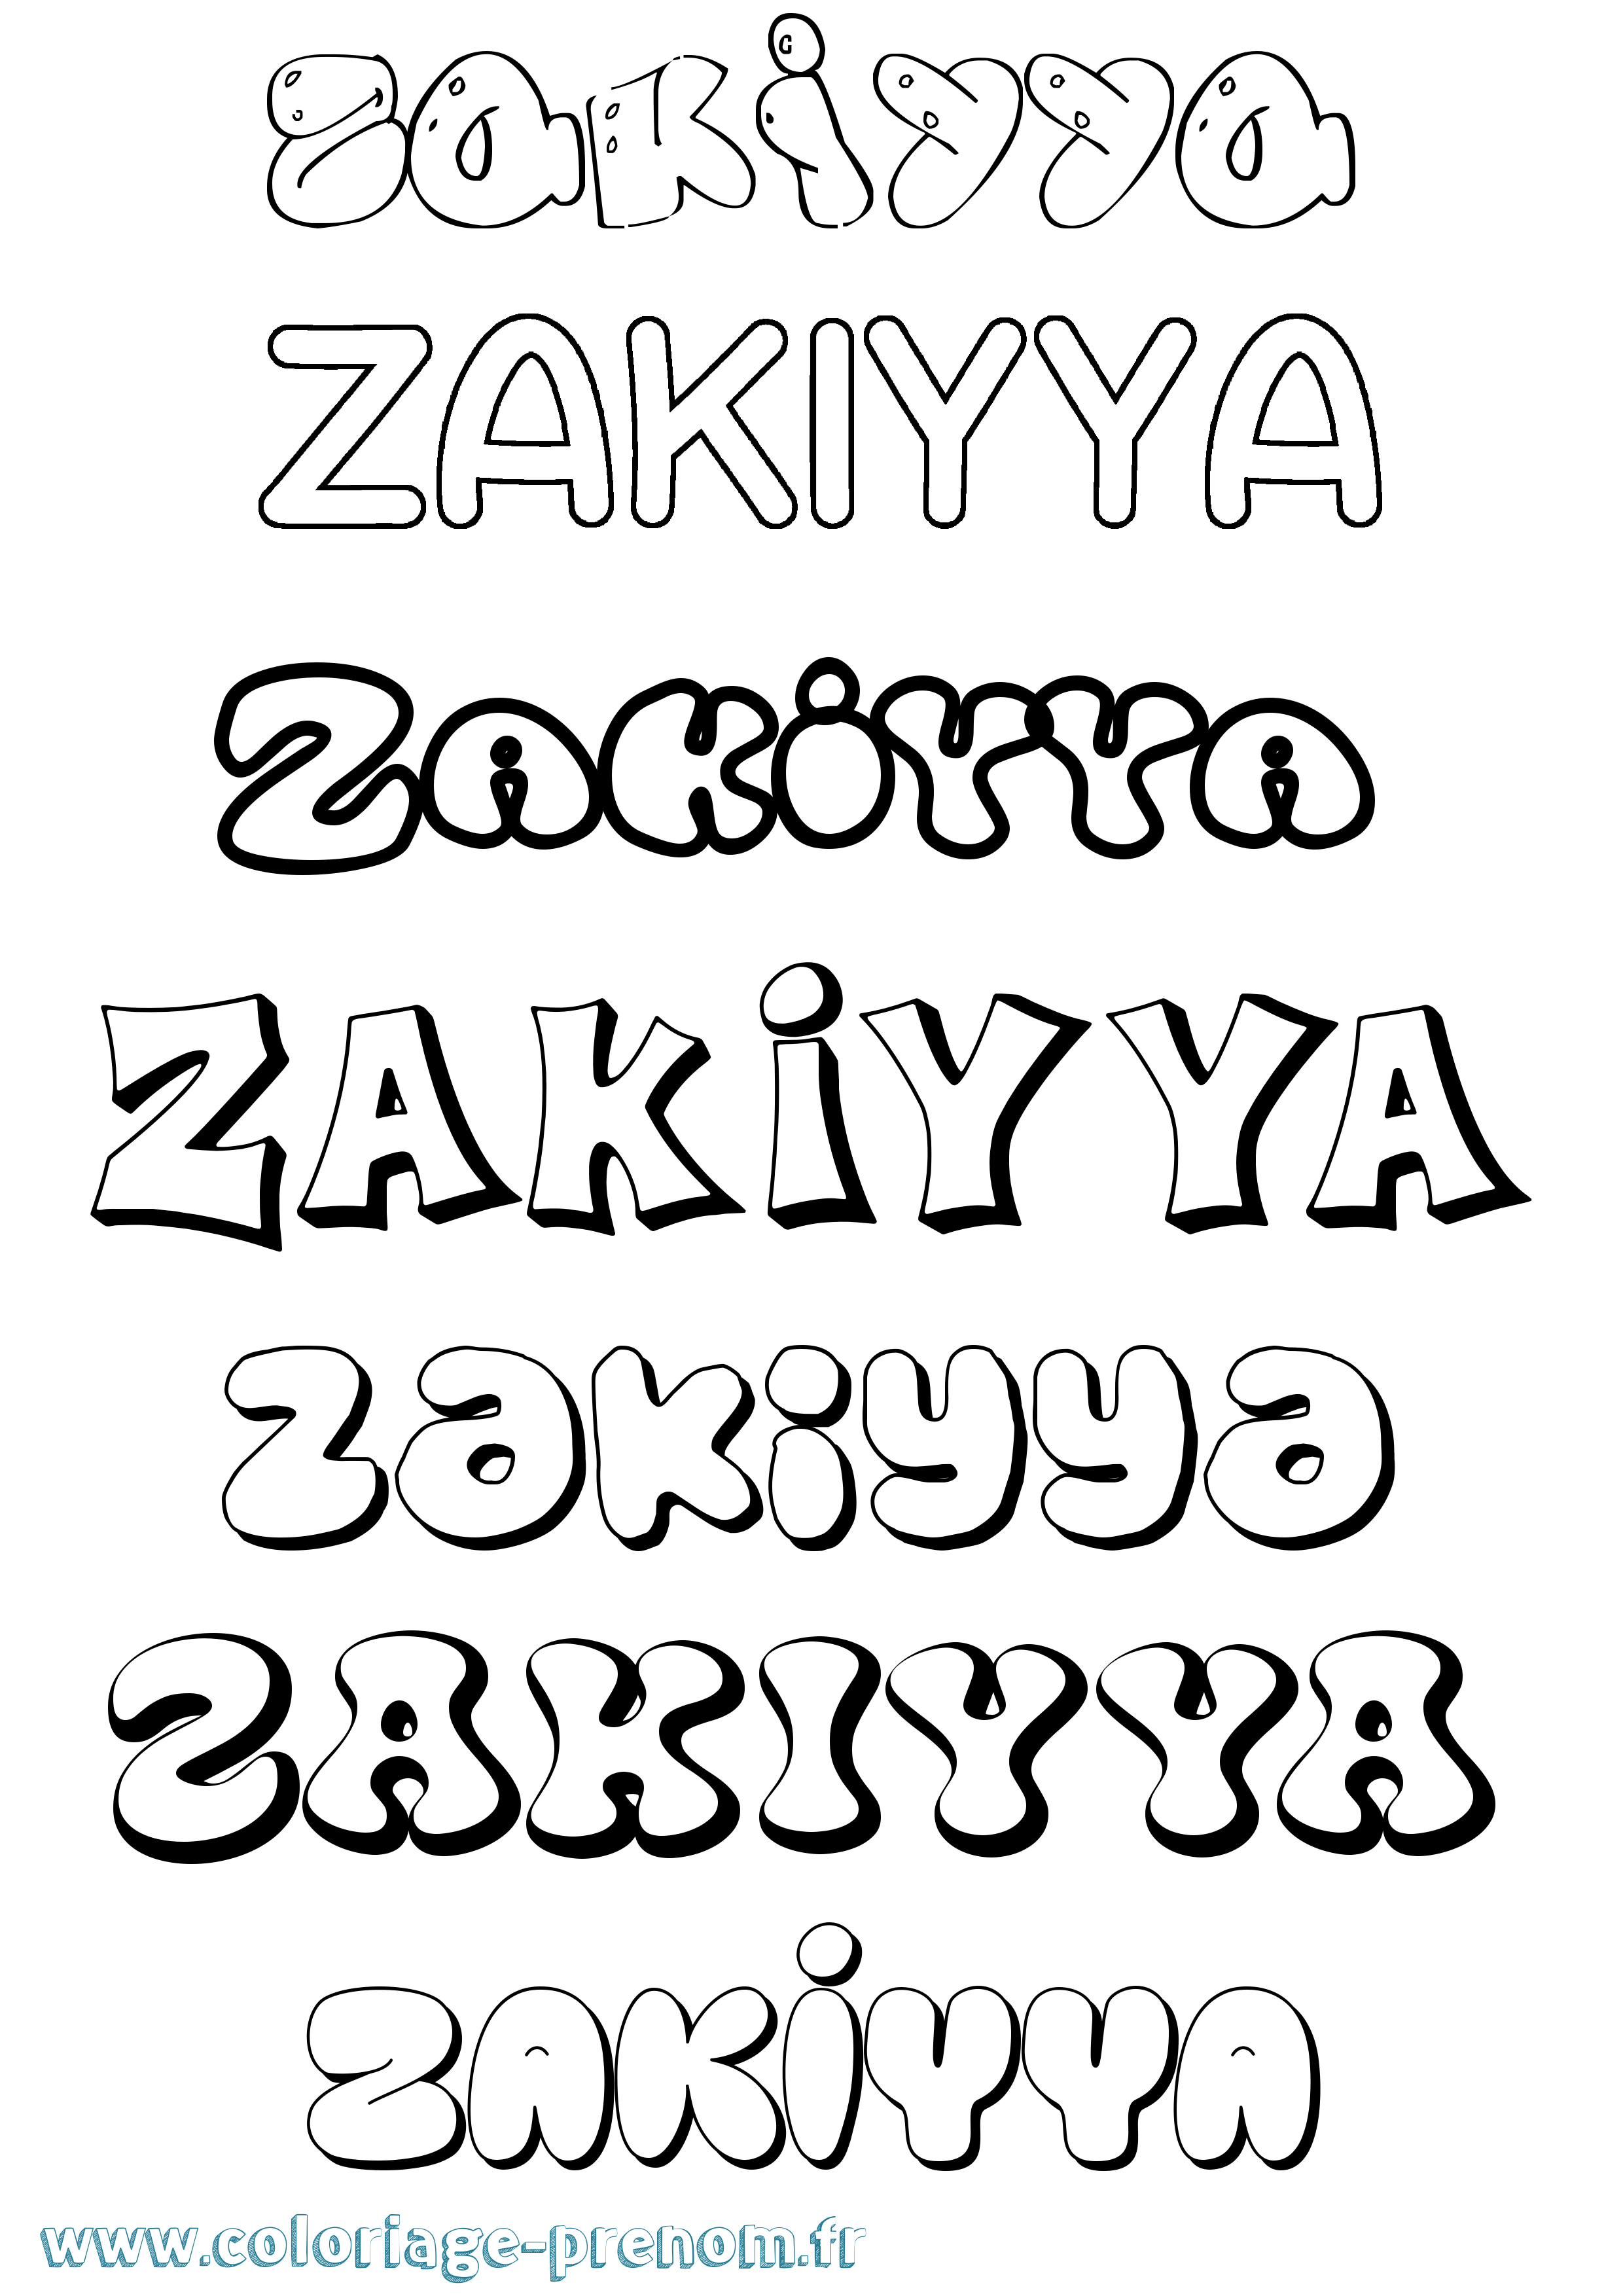 Coloriage prénom Zakiyya Bubble